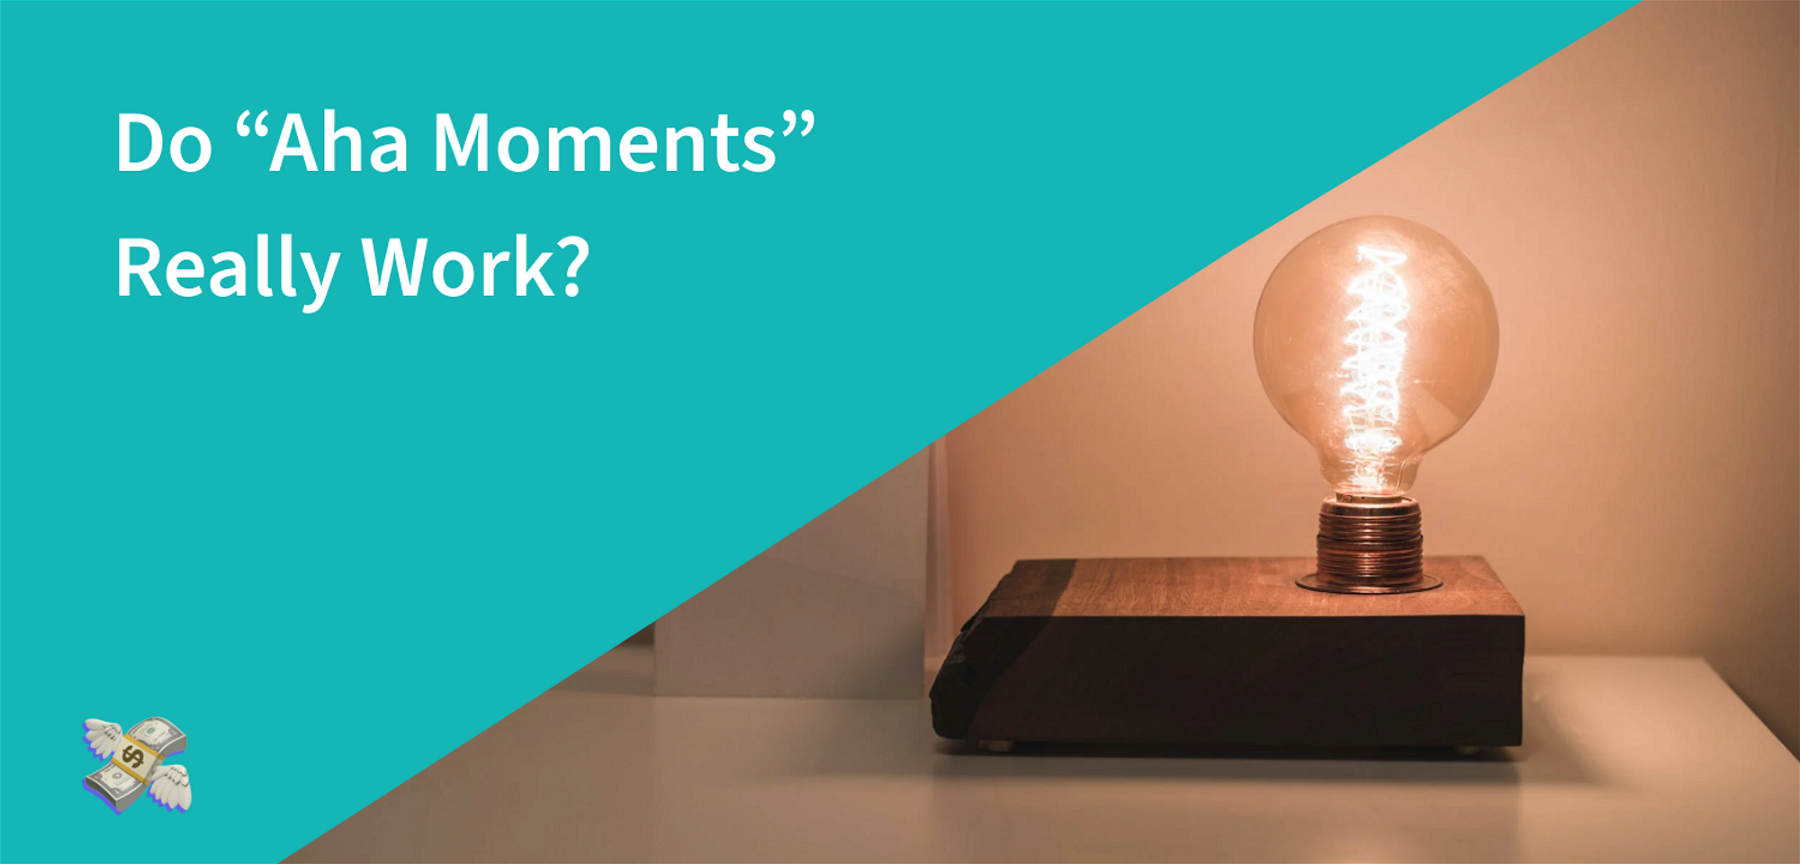 Do “Aha Moments” Really Work?